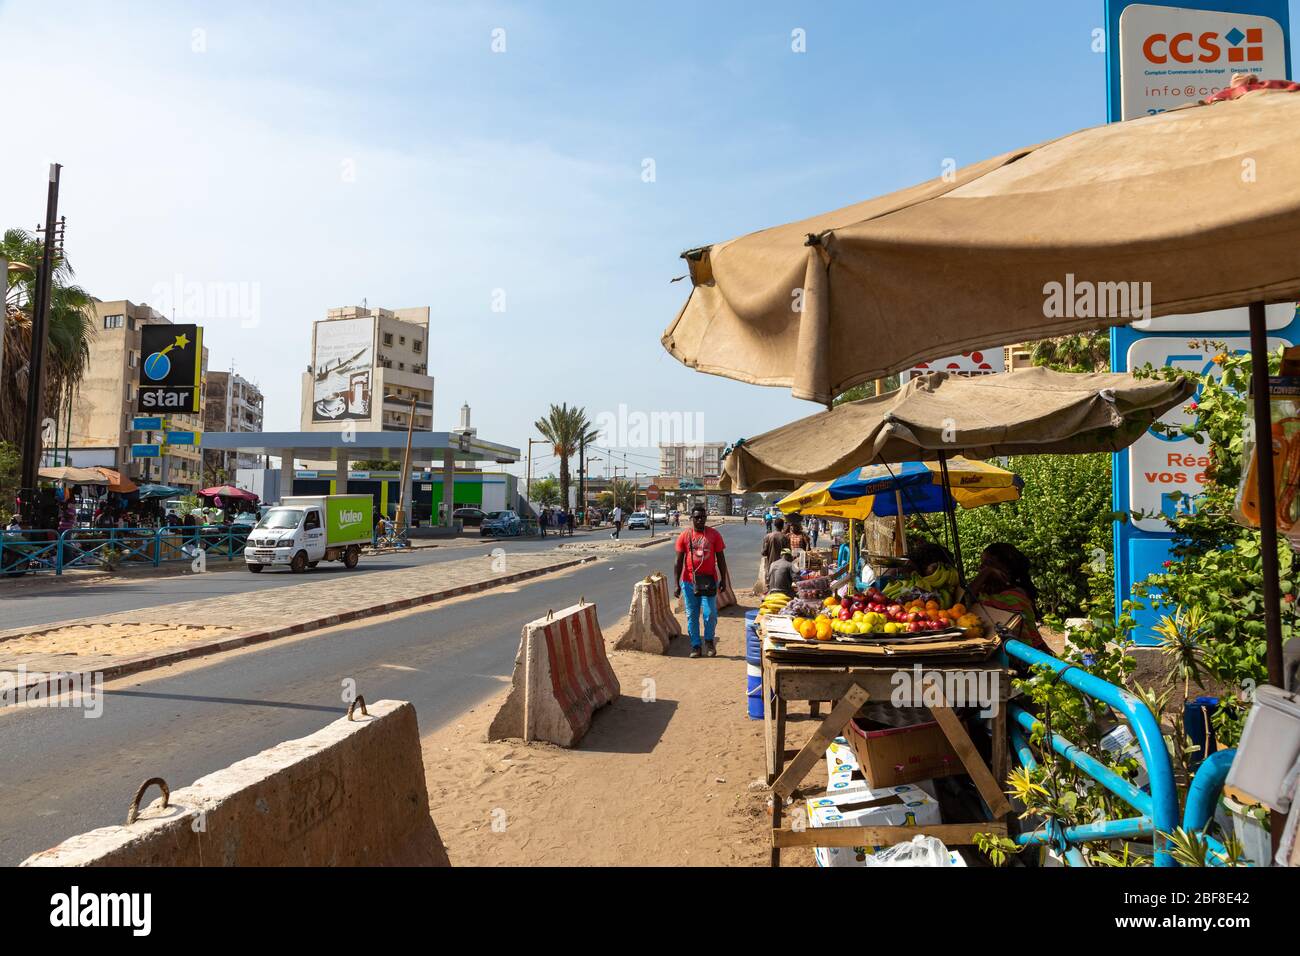 DAKAR, SENEGAL - 11. NOVEMBER 2019: Menschen arbeiten und Verkehr in Senegal Hauptstadt Dakar, Westafrika. Stockfoto